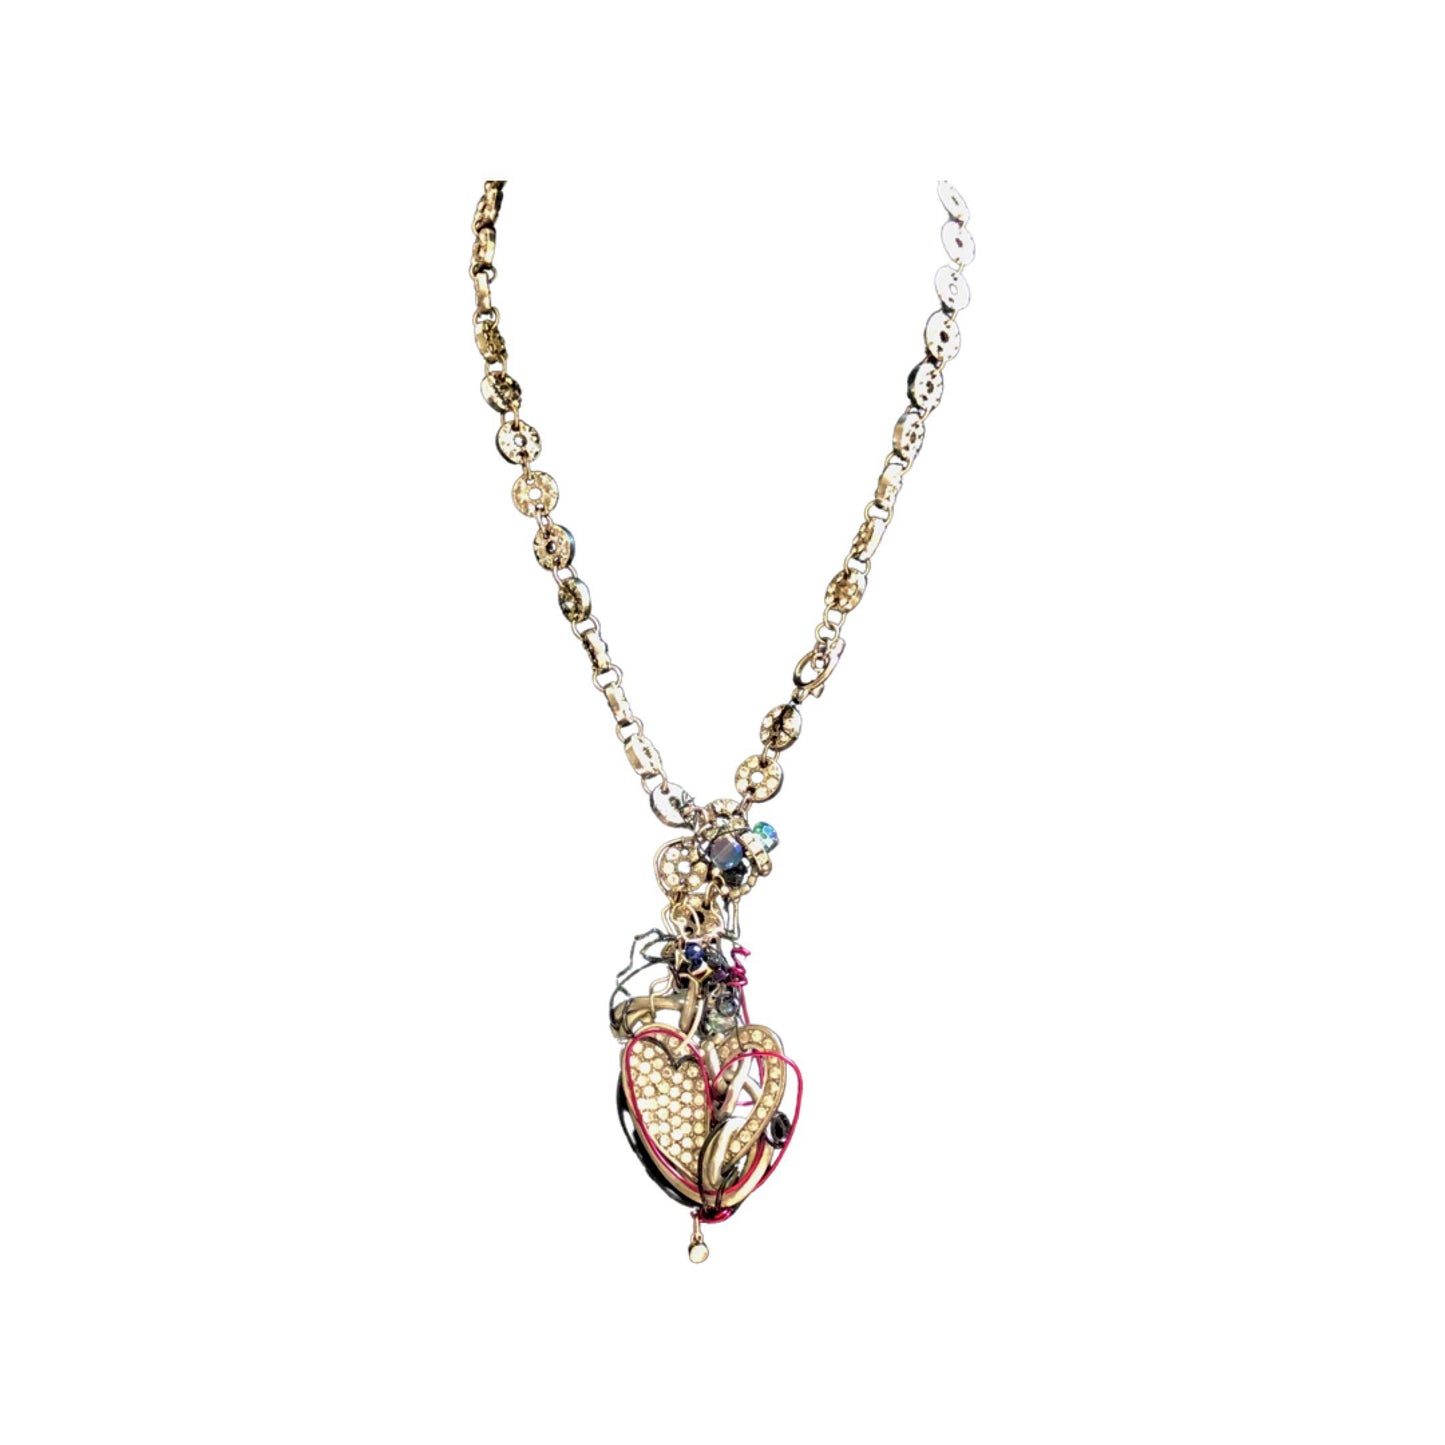 Queen of Hearts necklace